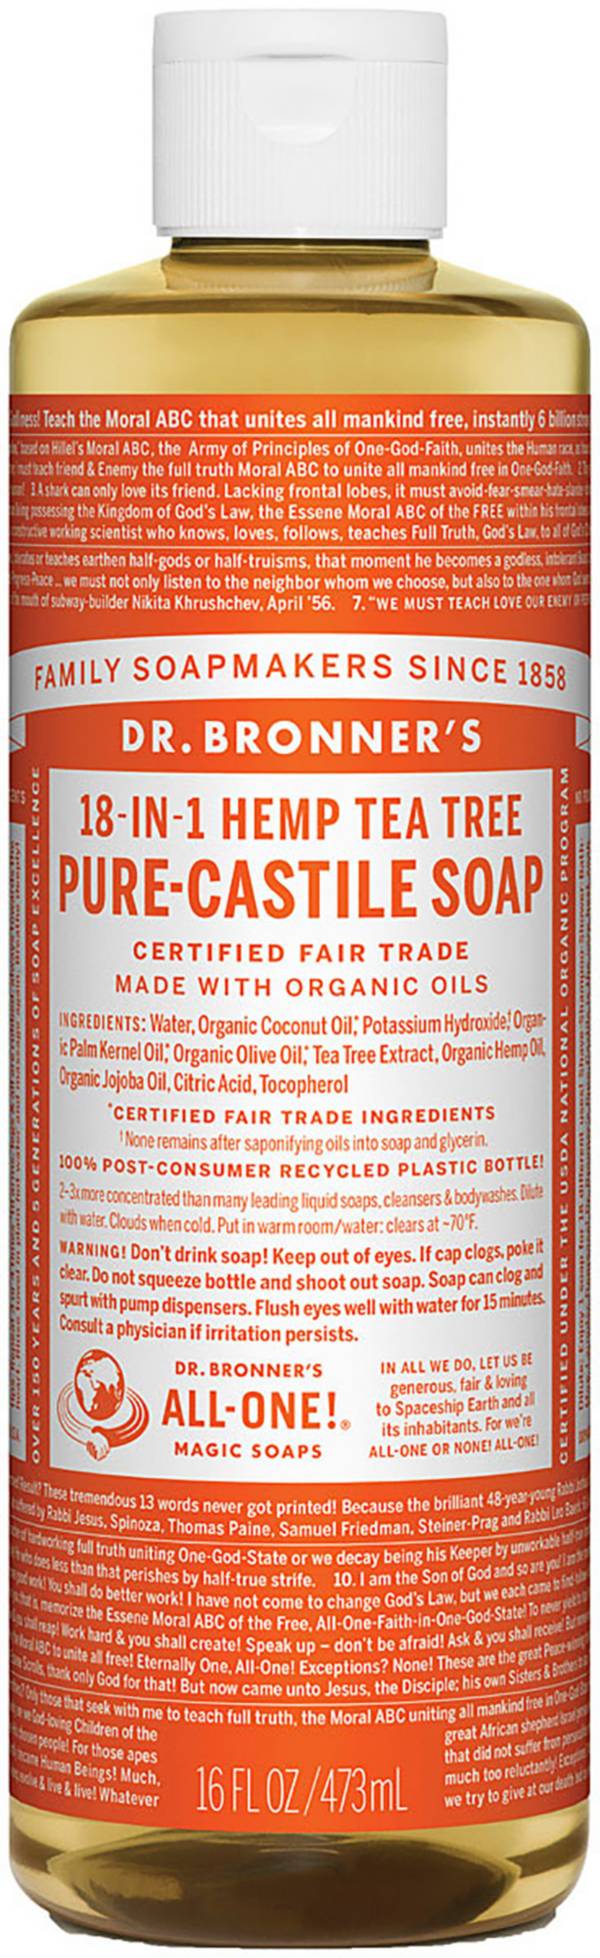 Dr. Bronner's Tea Tree 16 oz Pure-Castile Soap product image